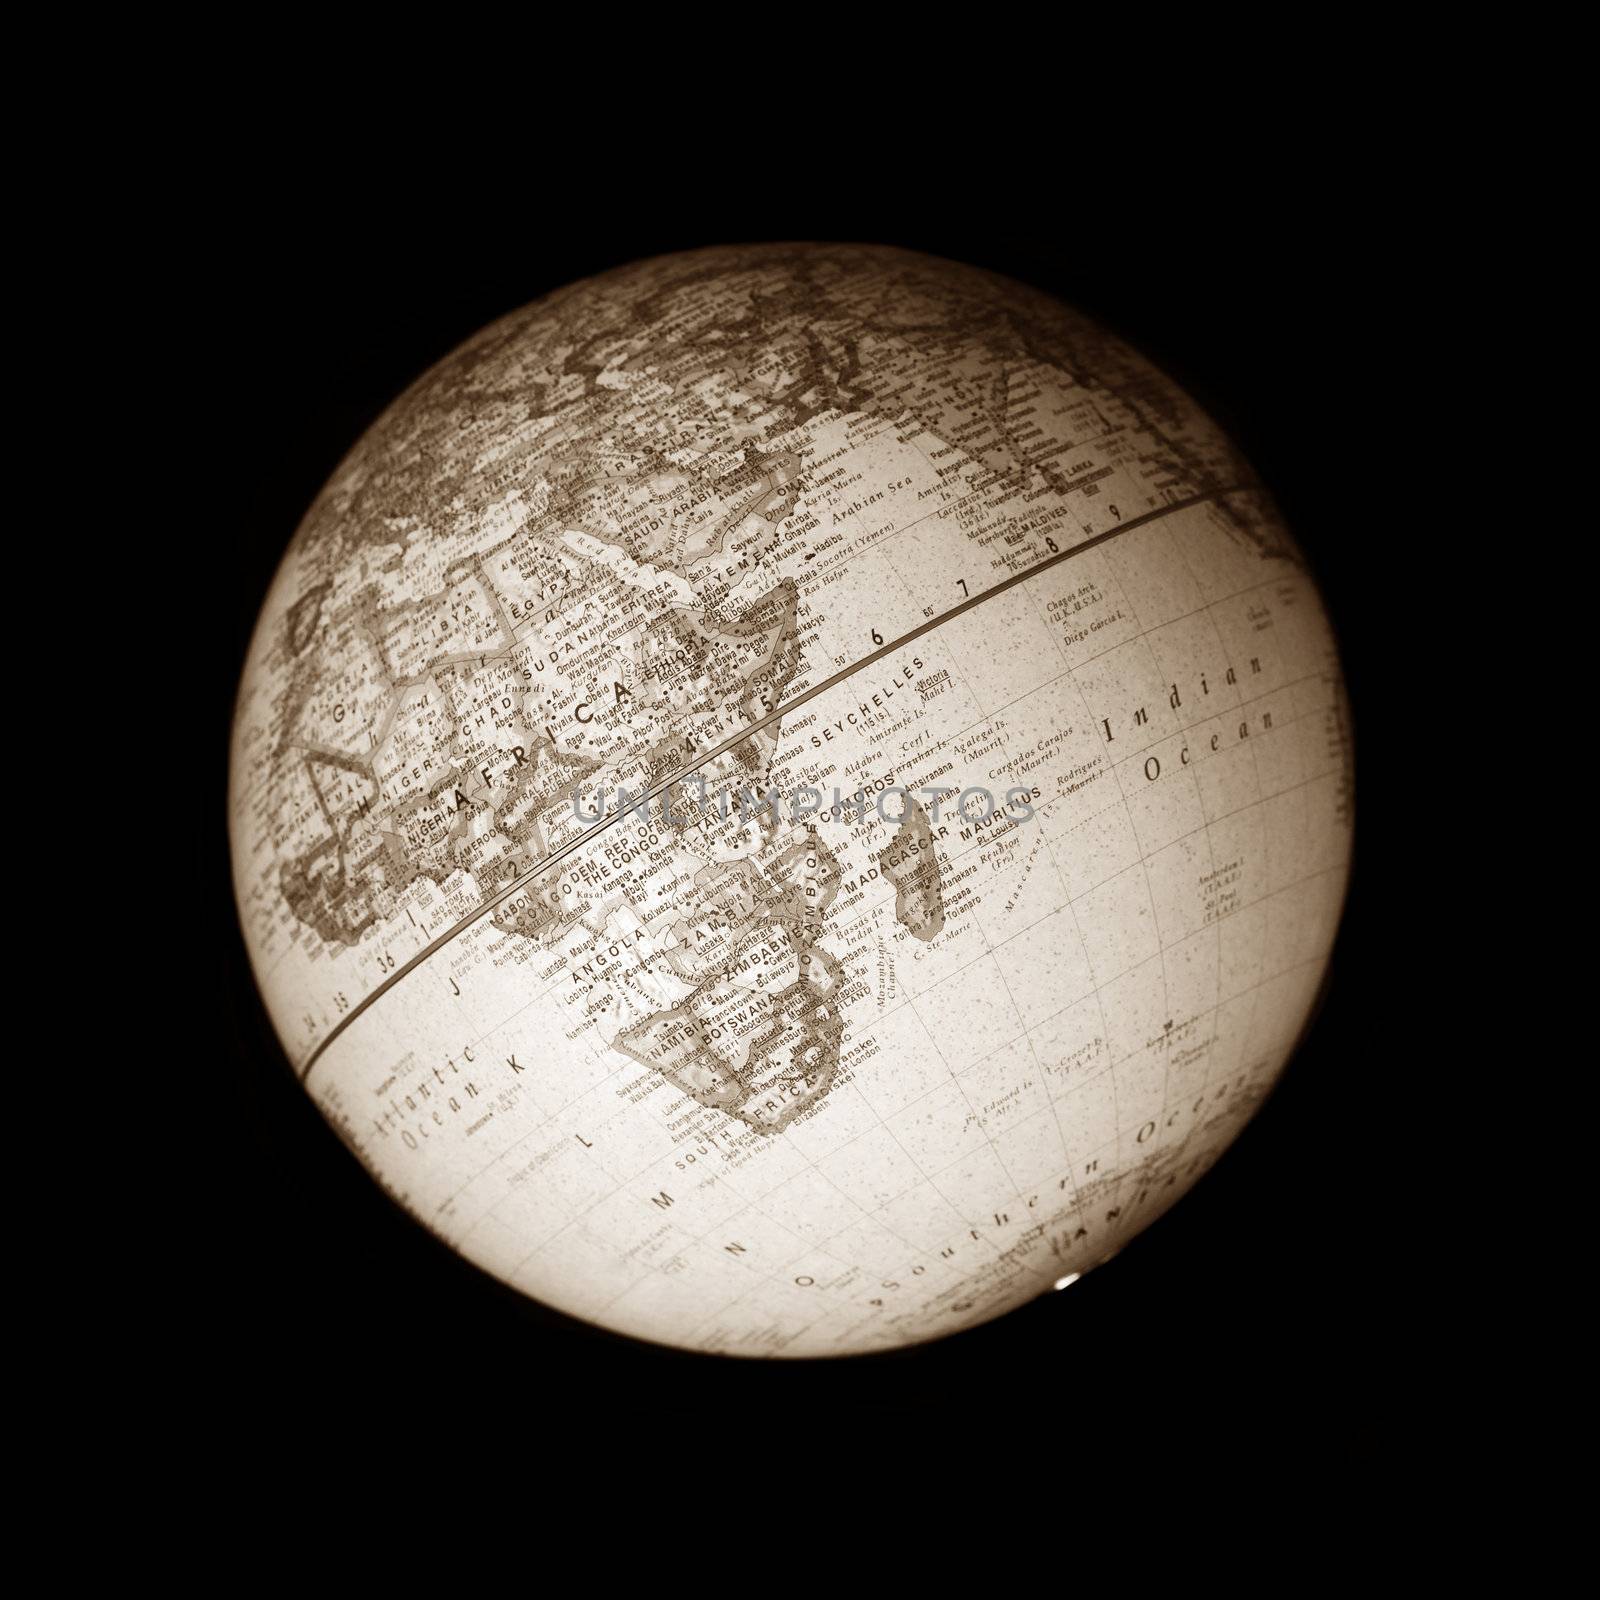 Isolated earth globe on black background